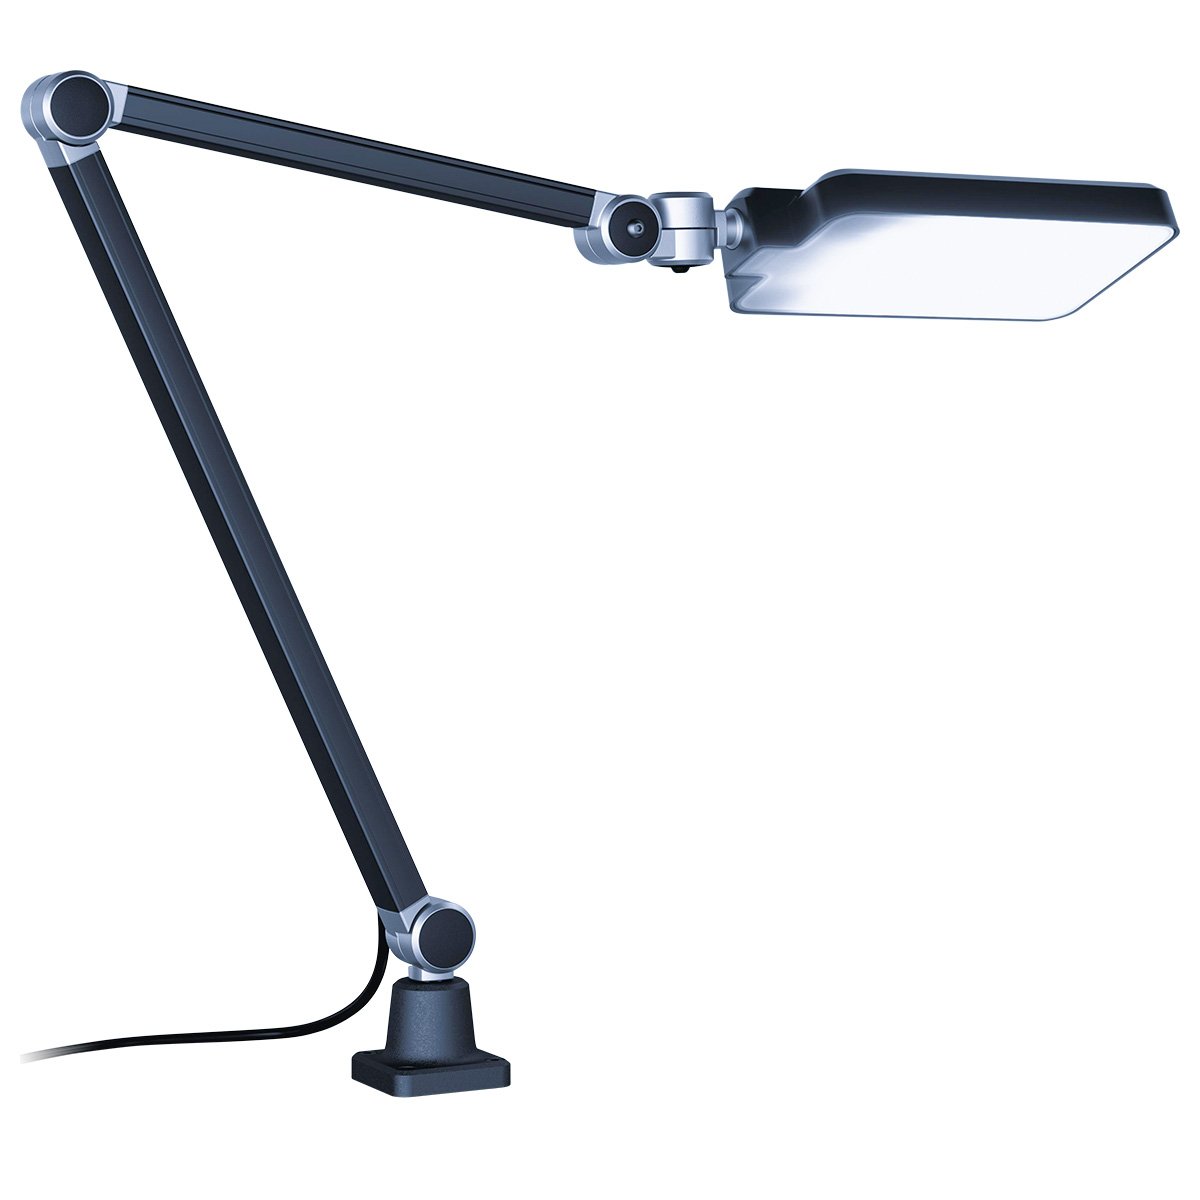 Vlaklamp Rocia.planar, RPD 1700/850 - 18 W, zwart, lange armen